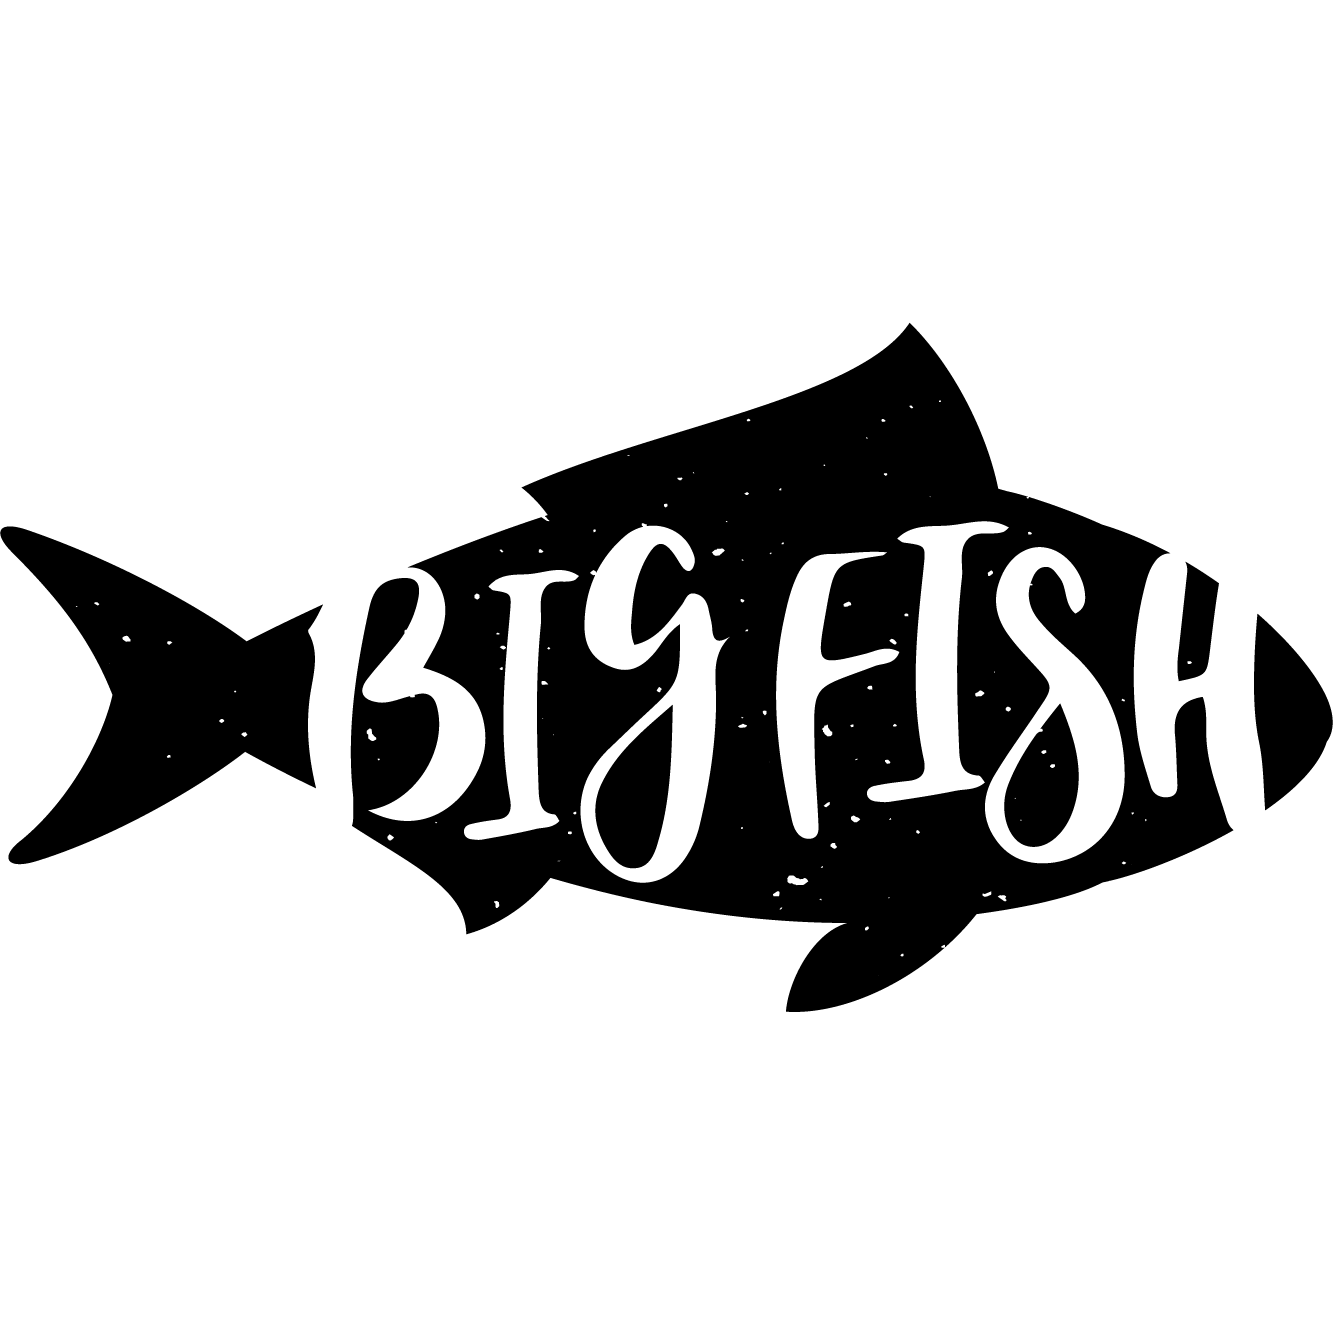 The Big Fish on Park Logo